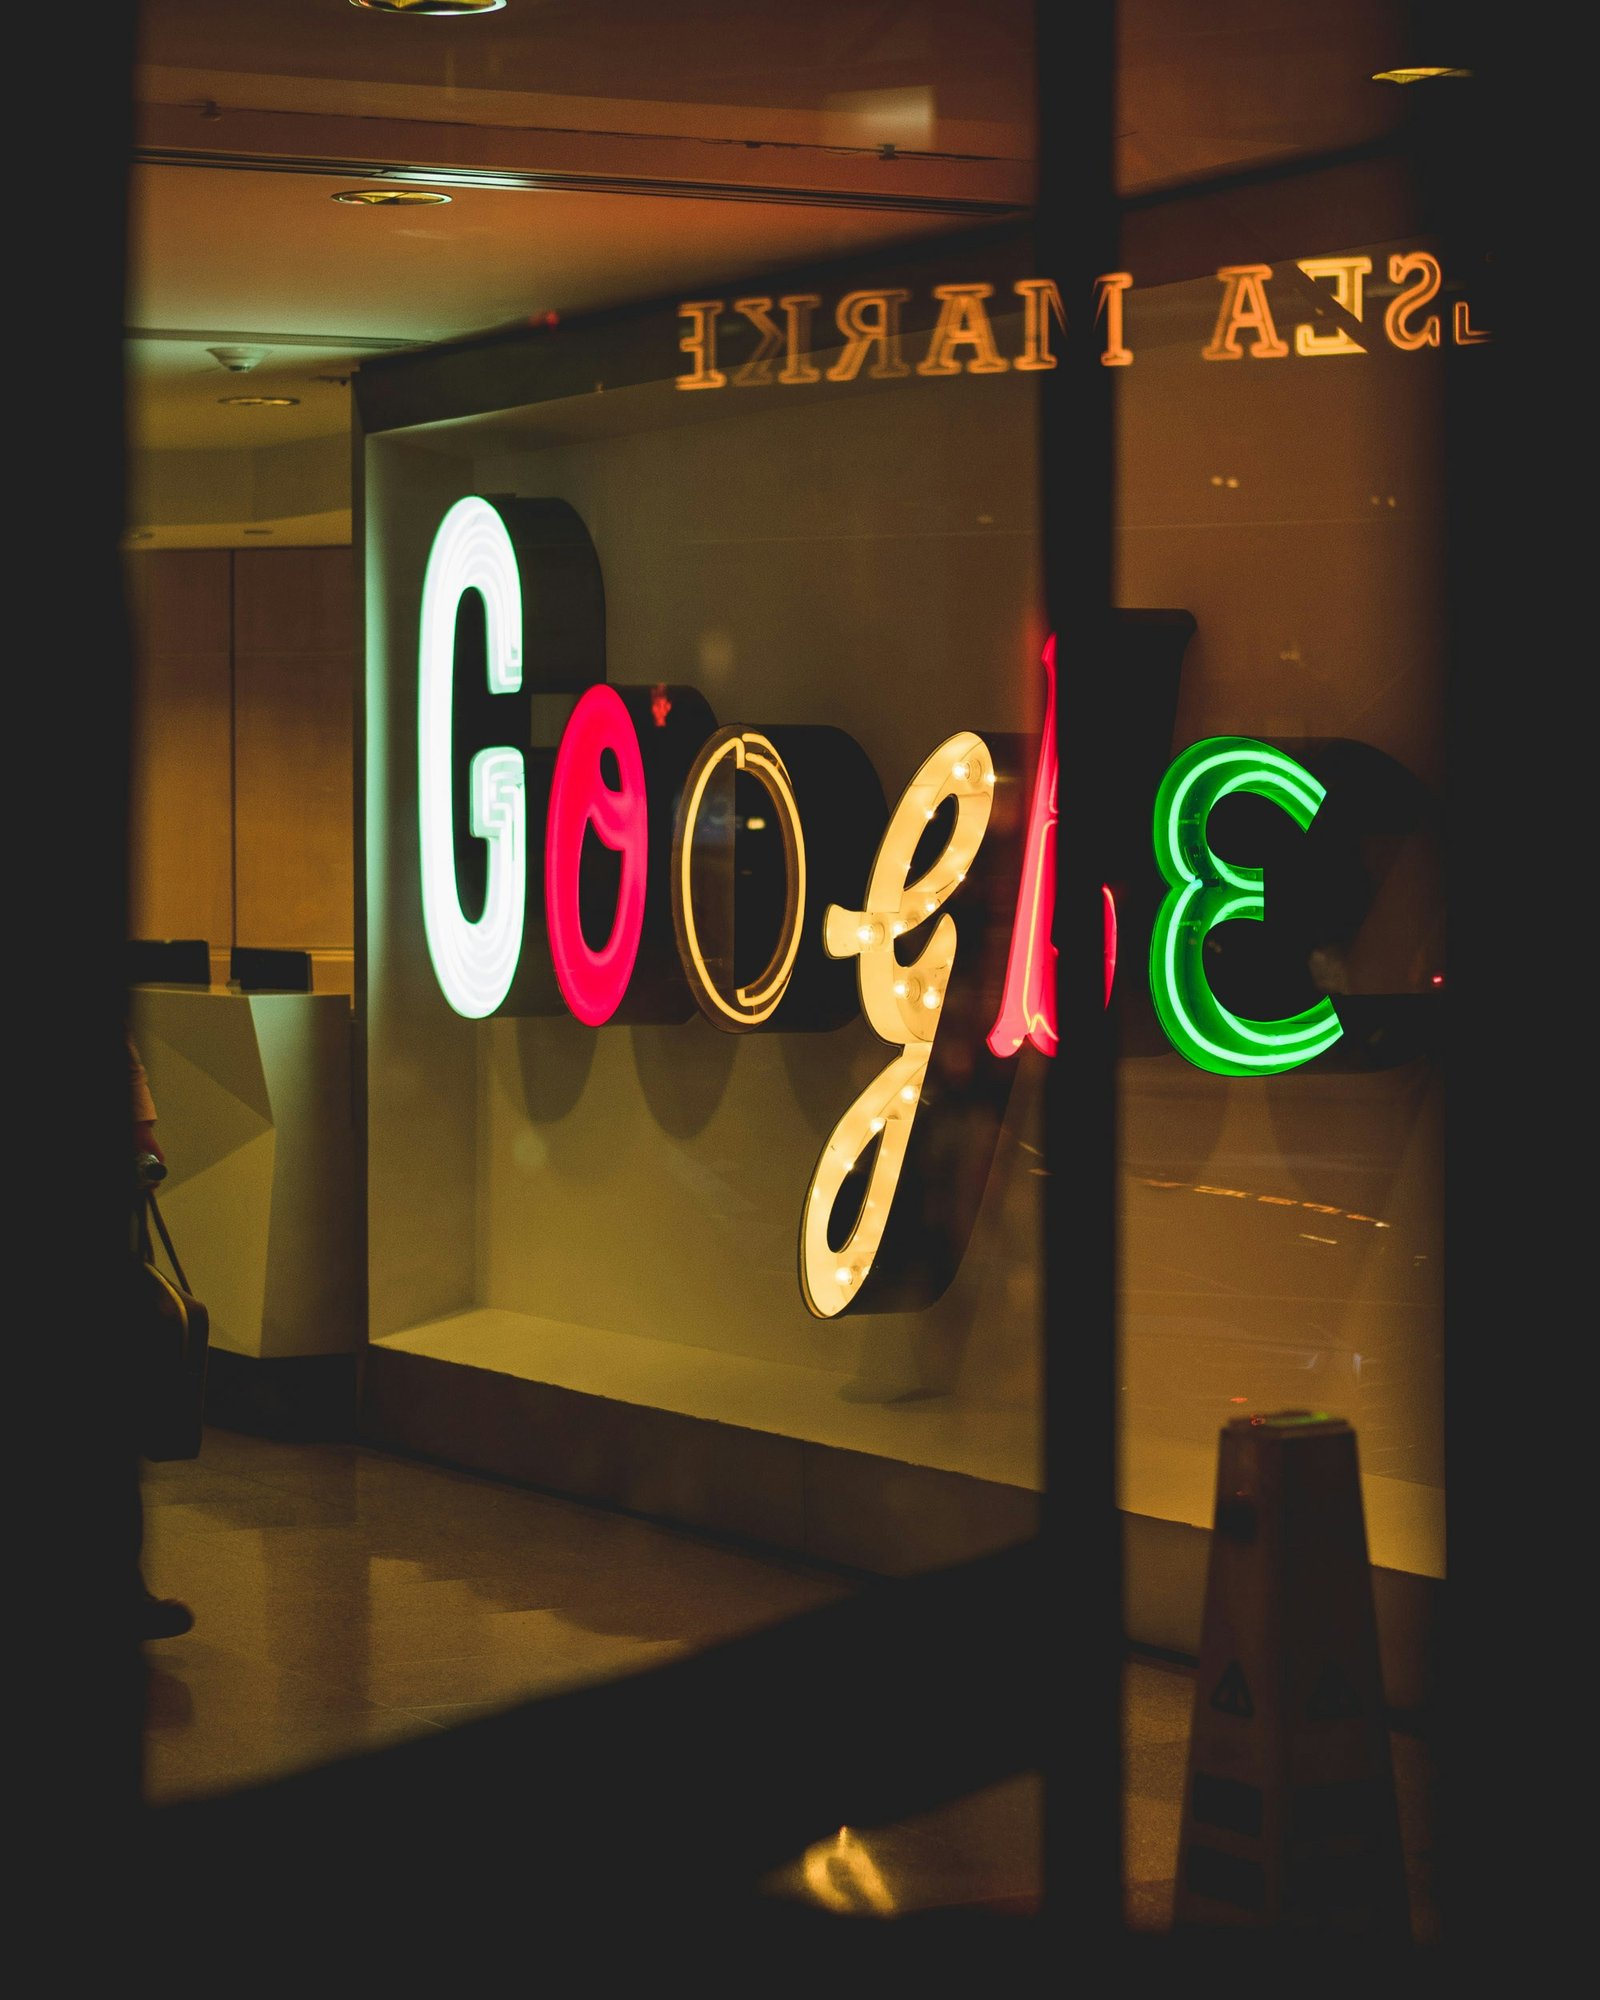 Huge Google Search Document Leak Reveals Inner Workings of Ranking Algorithm